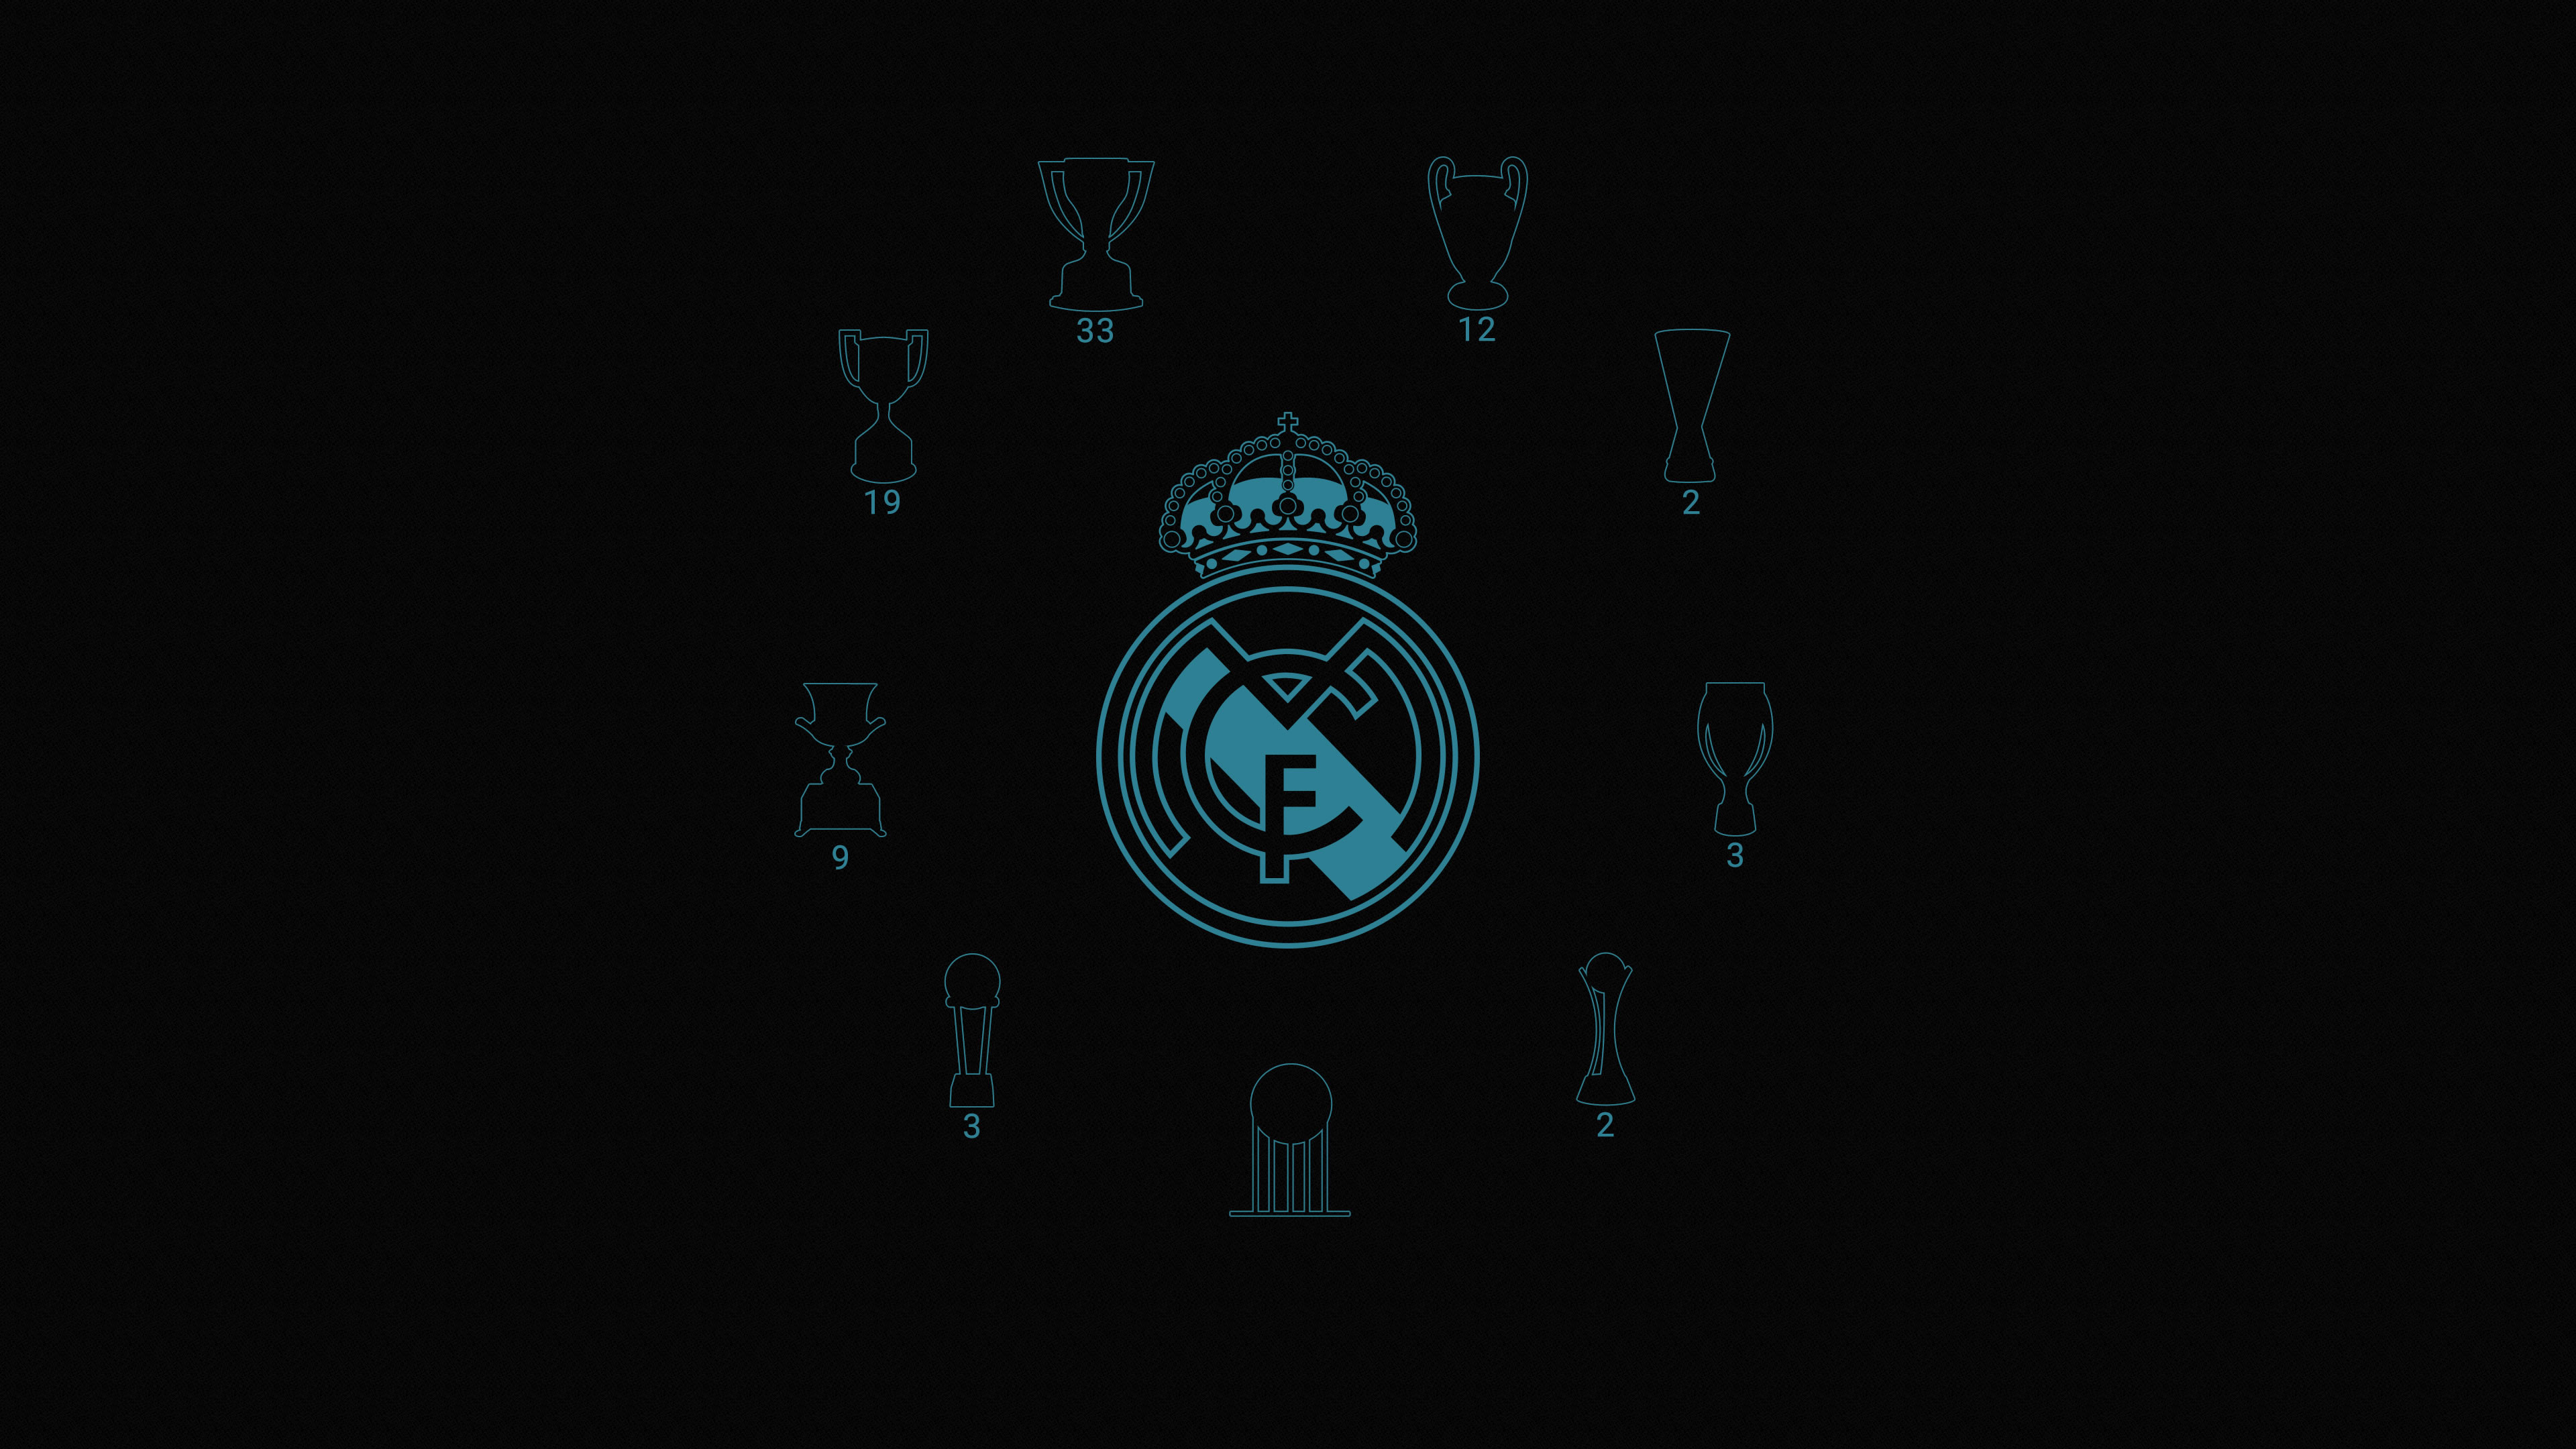 Real Madrid Away Wallpaper 2017 / 18 by khalidvawda